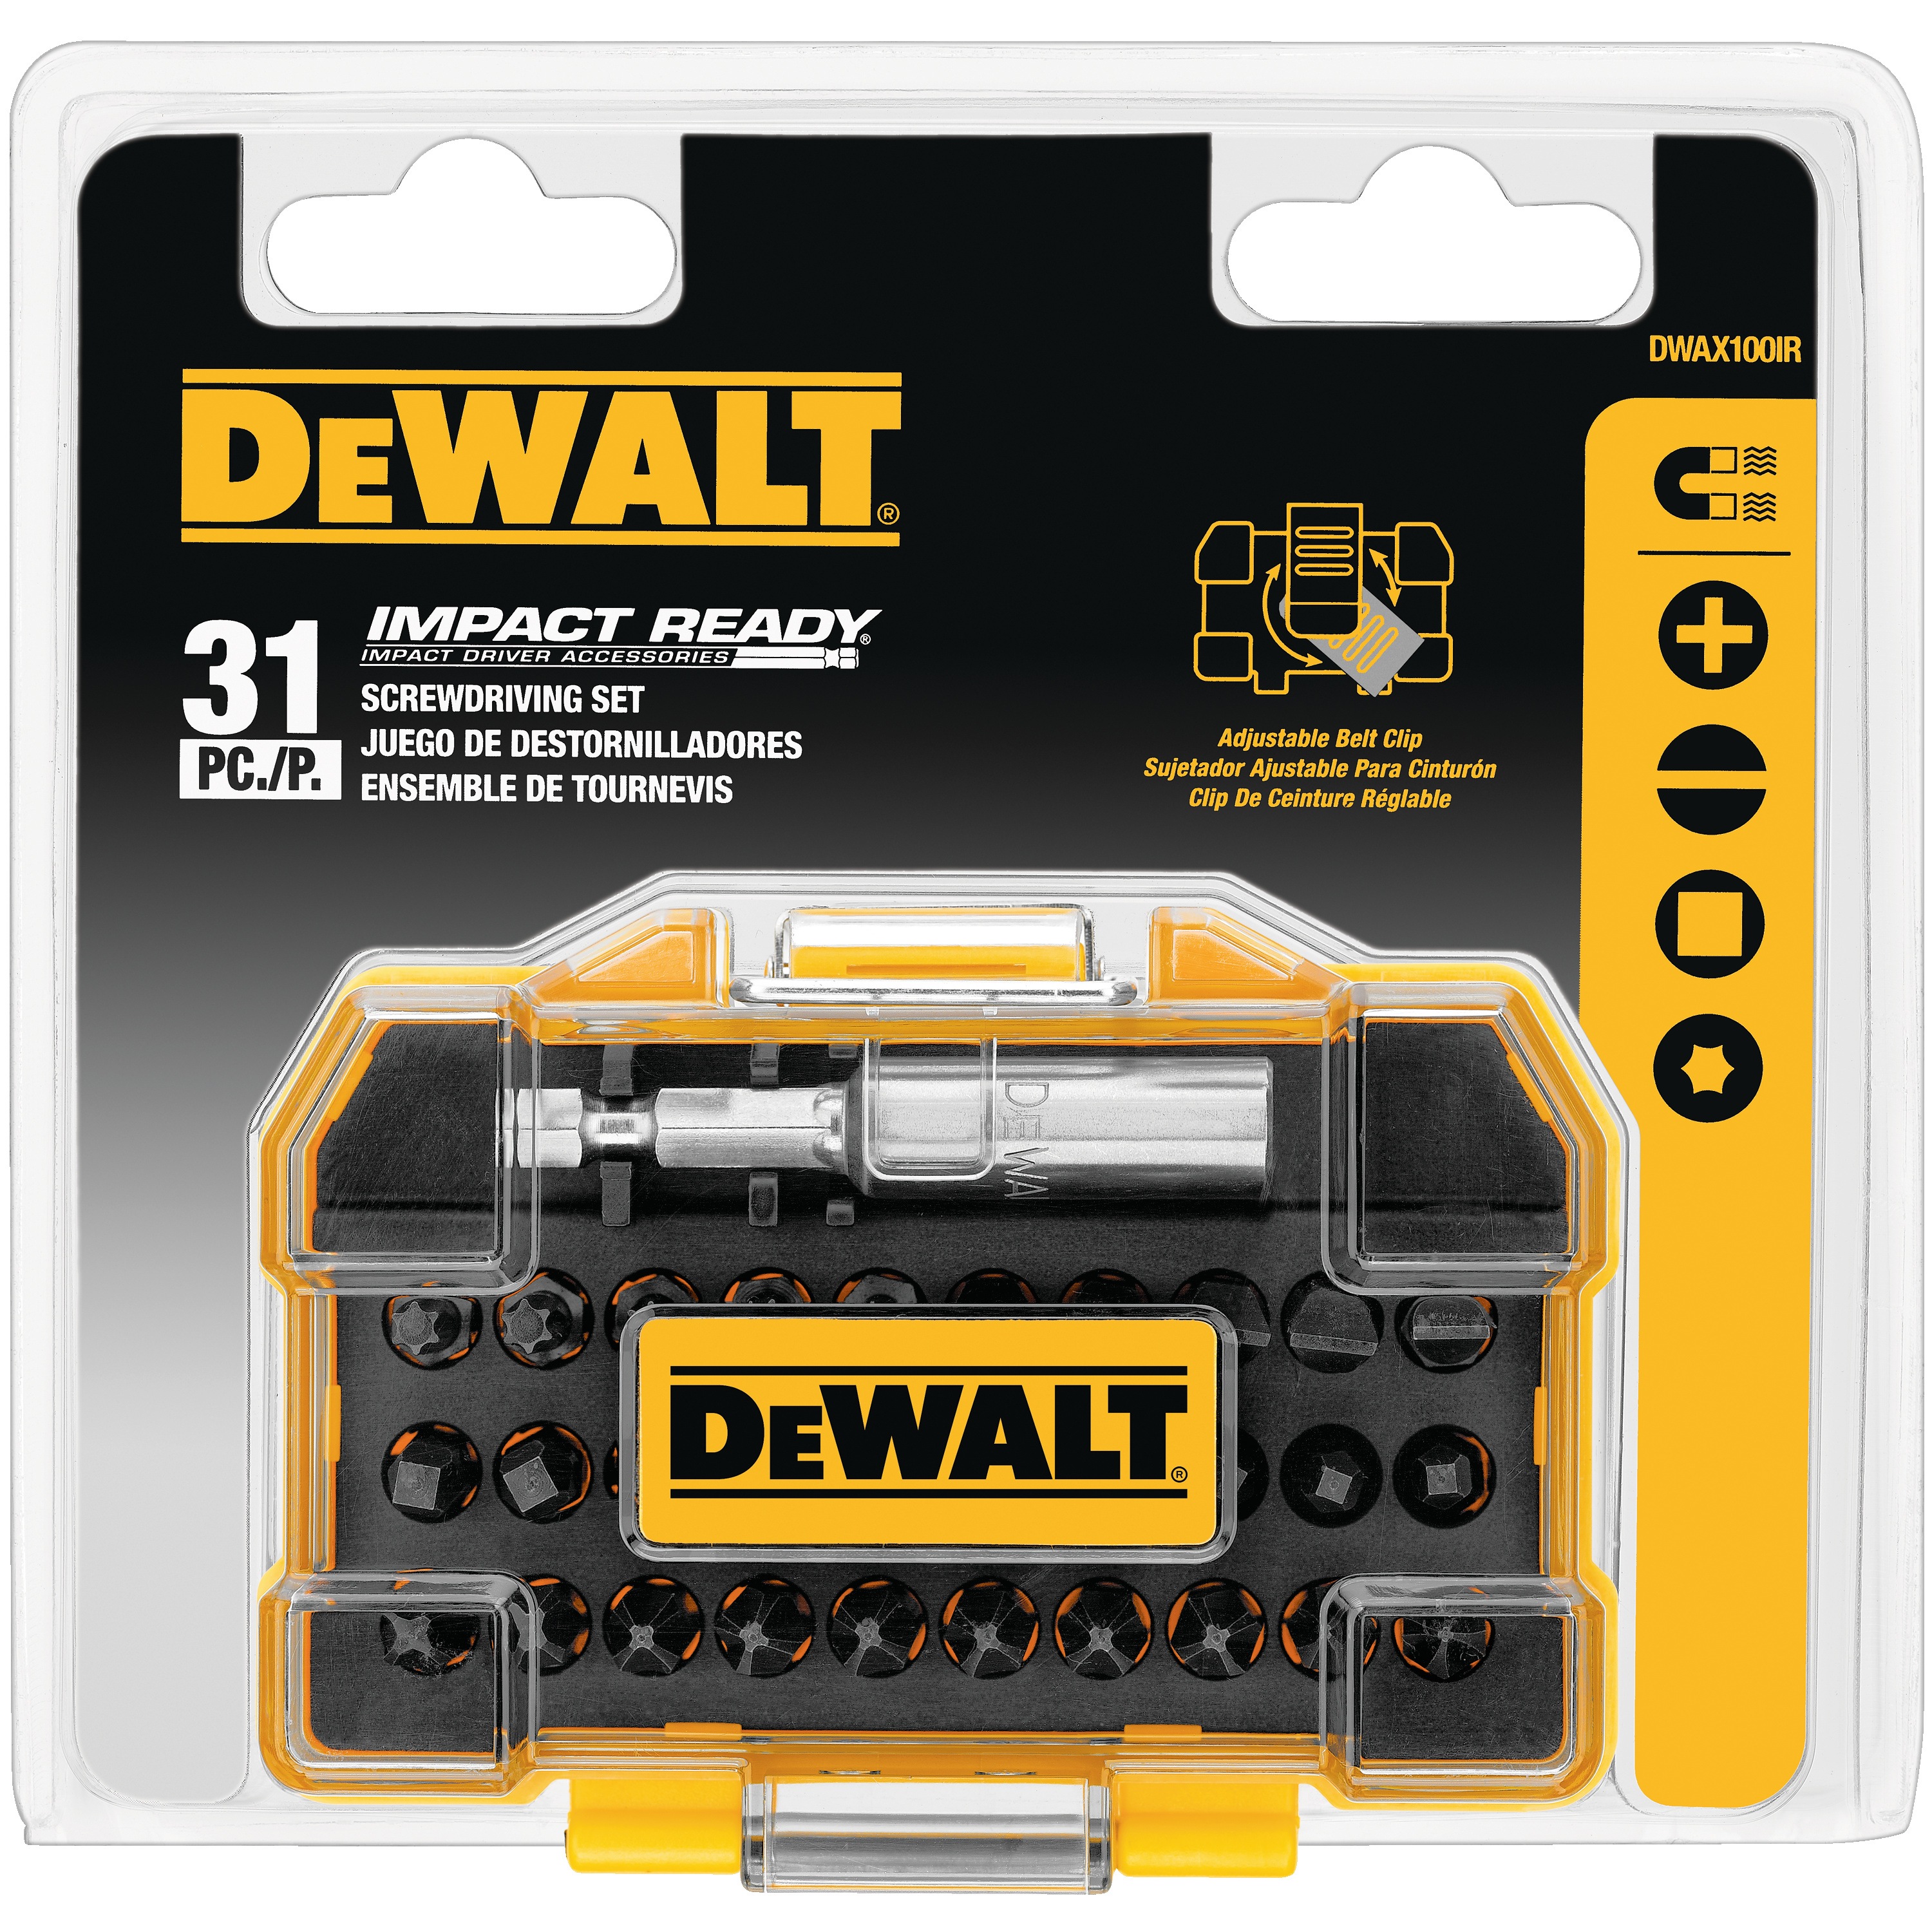 DEWALT - 31Pc IMPACT READY Extra Small ToughCase Screwdriving Set - DWAX100IR